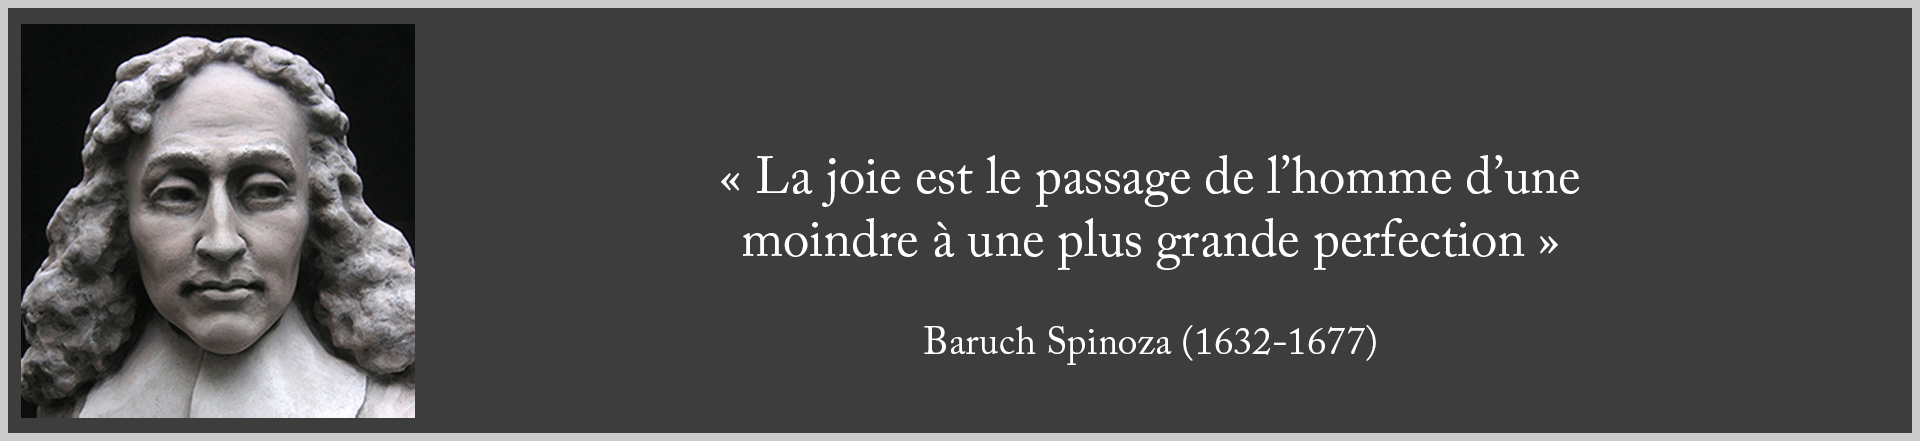 Baruch Spinoza dpurb site web